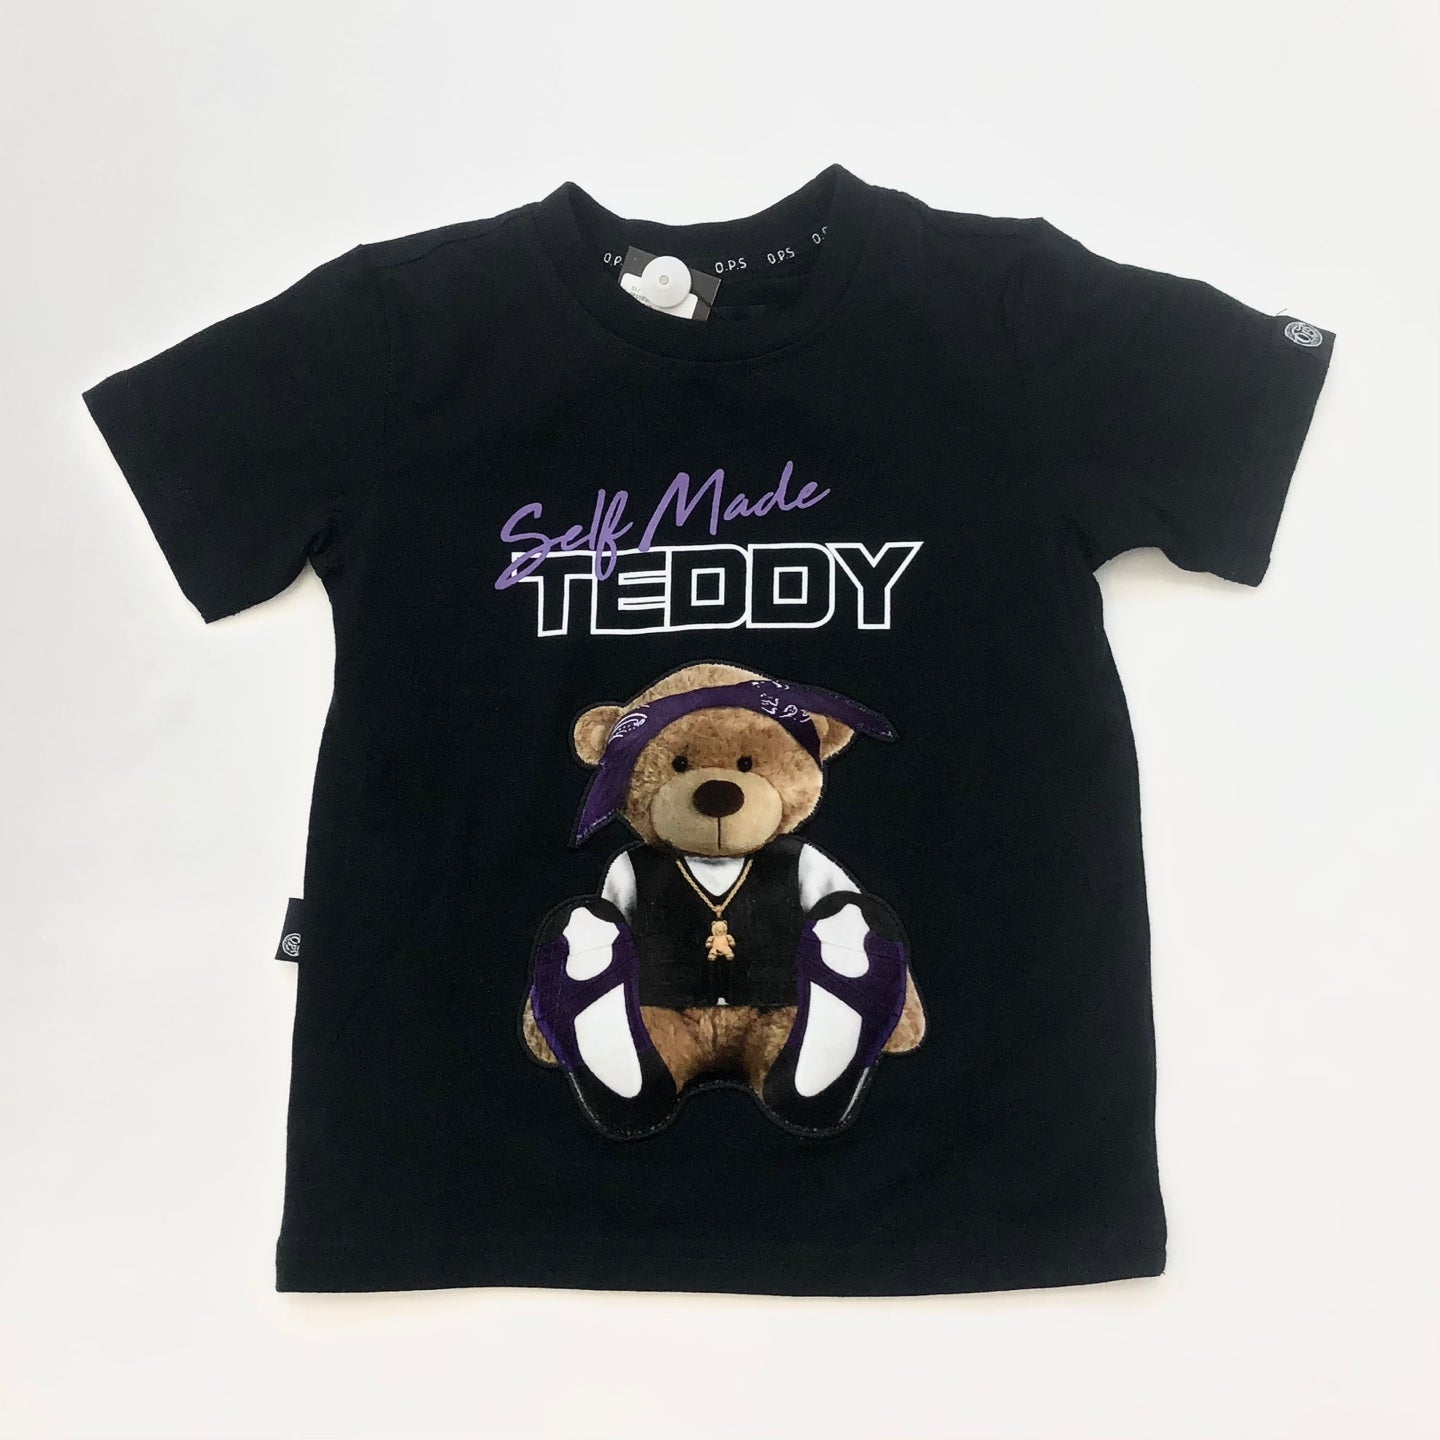 Kid’s Self Made Teddy Graphic T-Shirt - Black/Purple